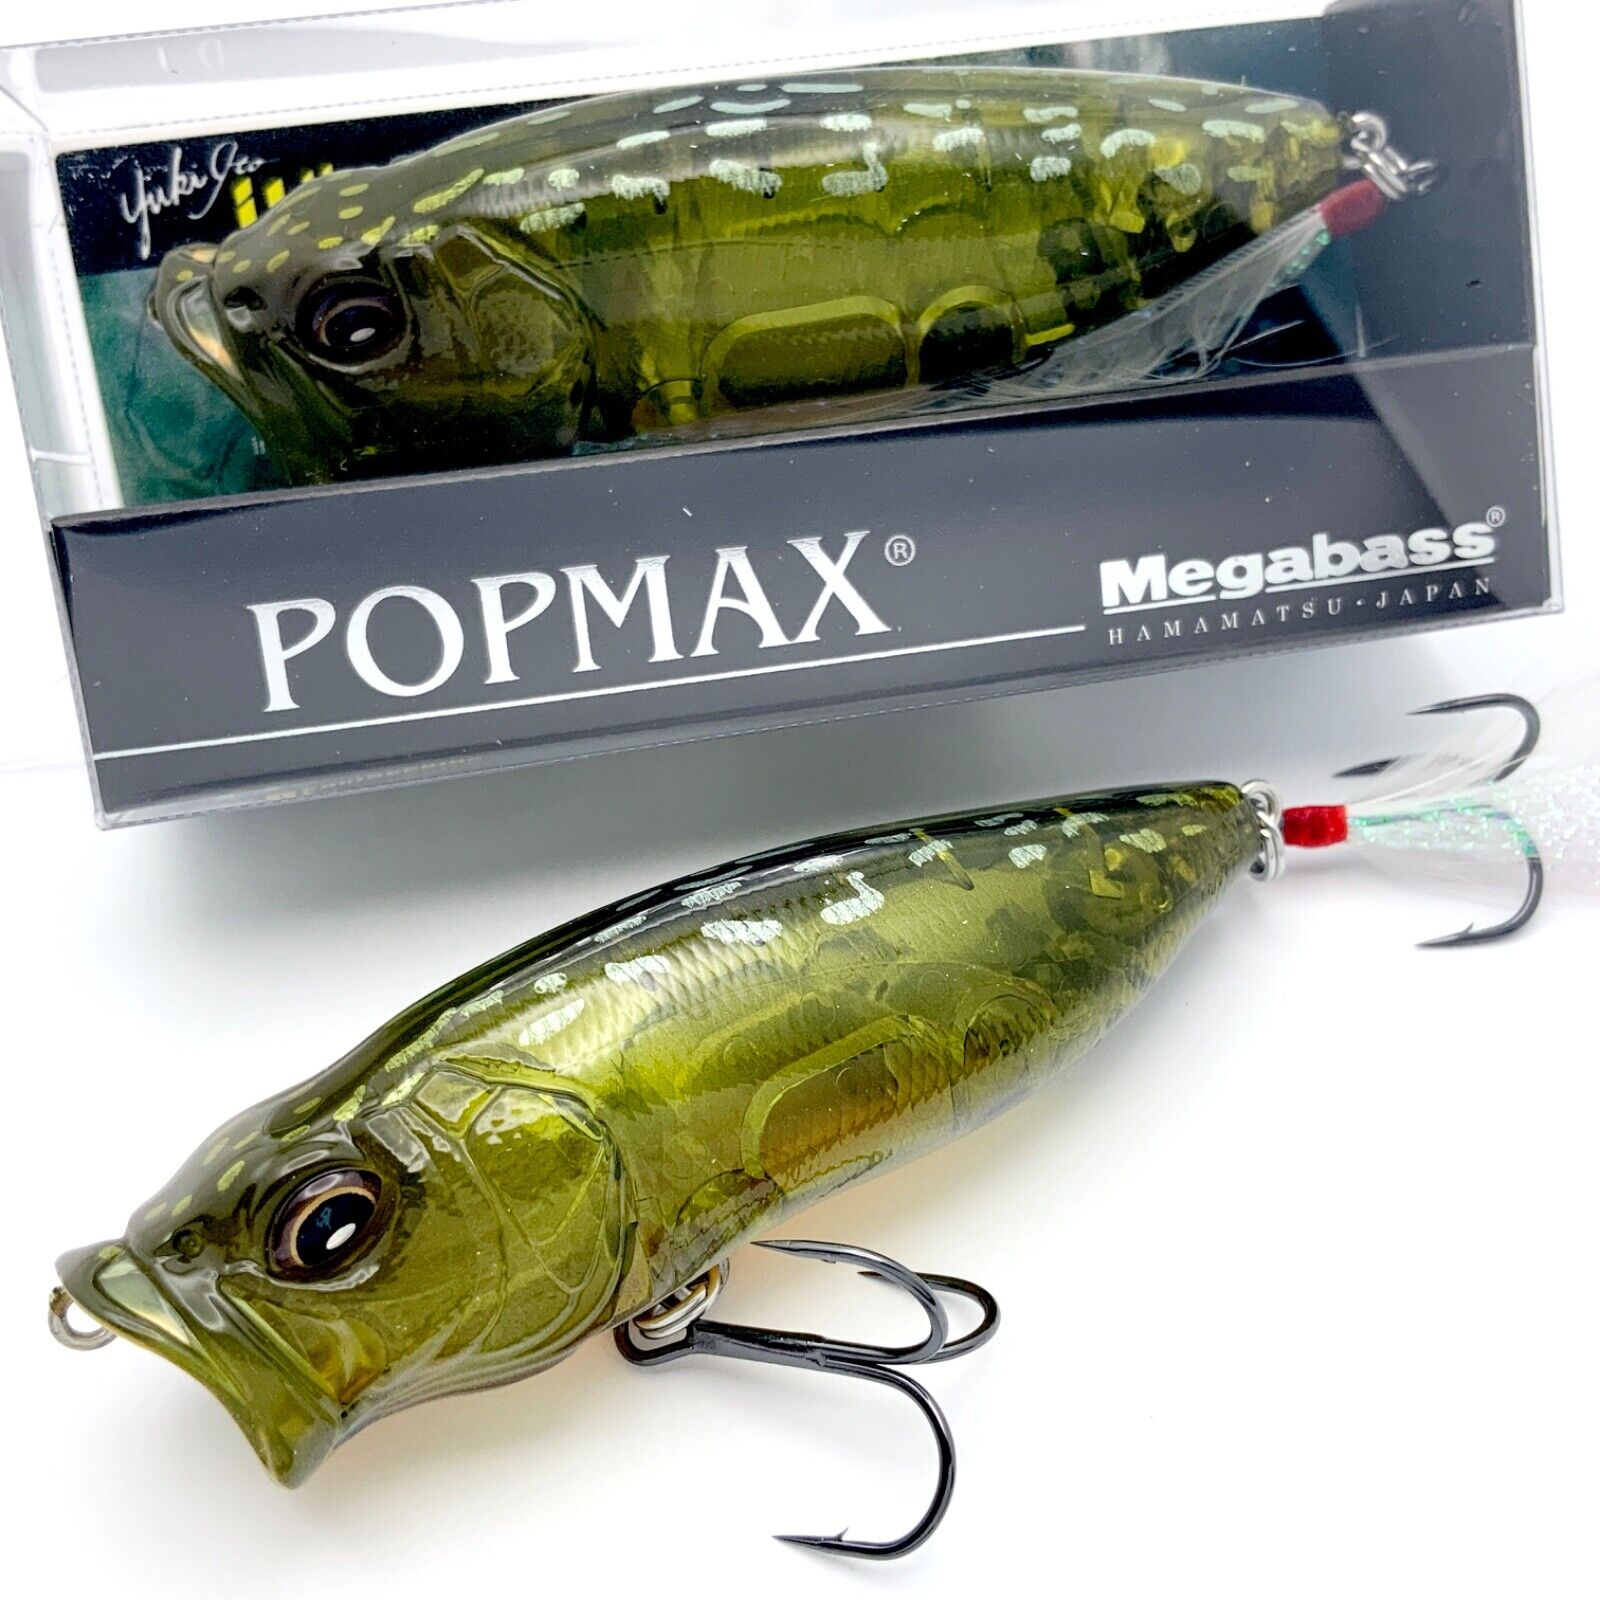 Megabass PopMax Topwater Popper: (SP-C) ITO GORI - Respect Series 46  4513473504754 | eBay